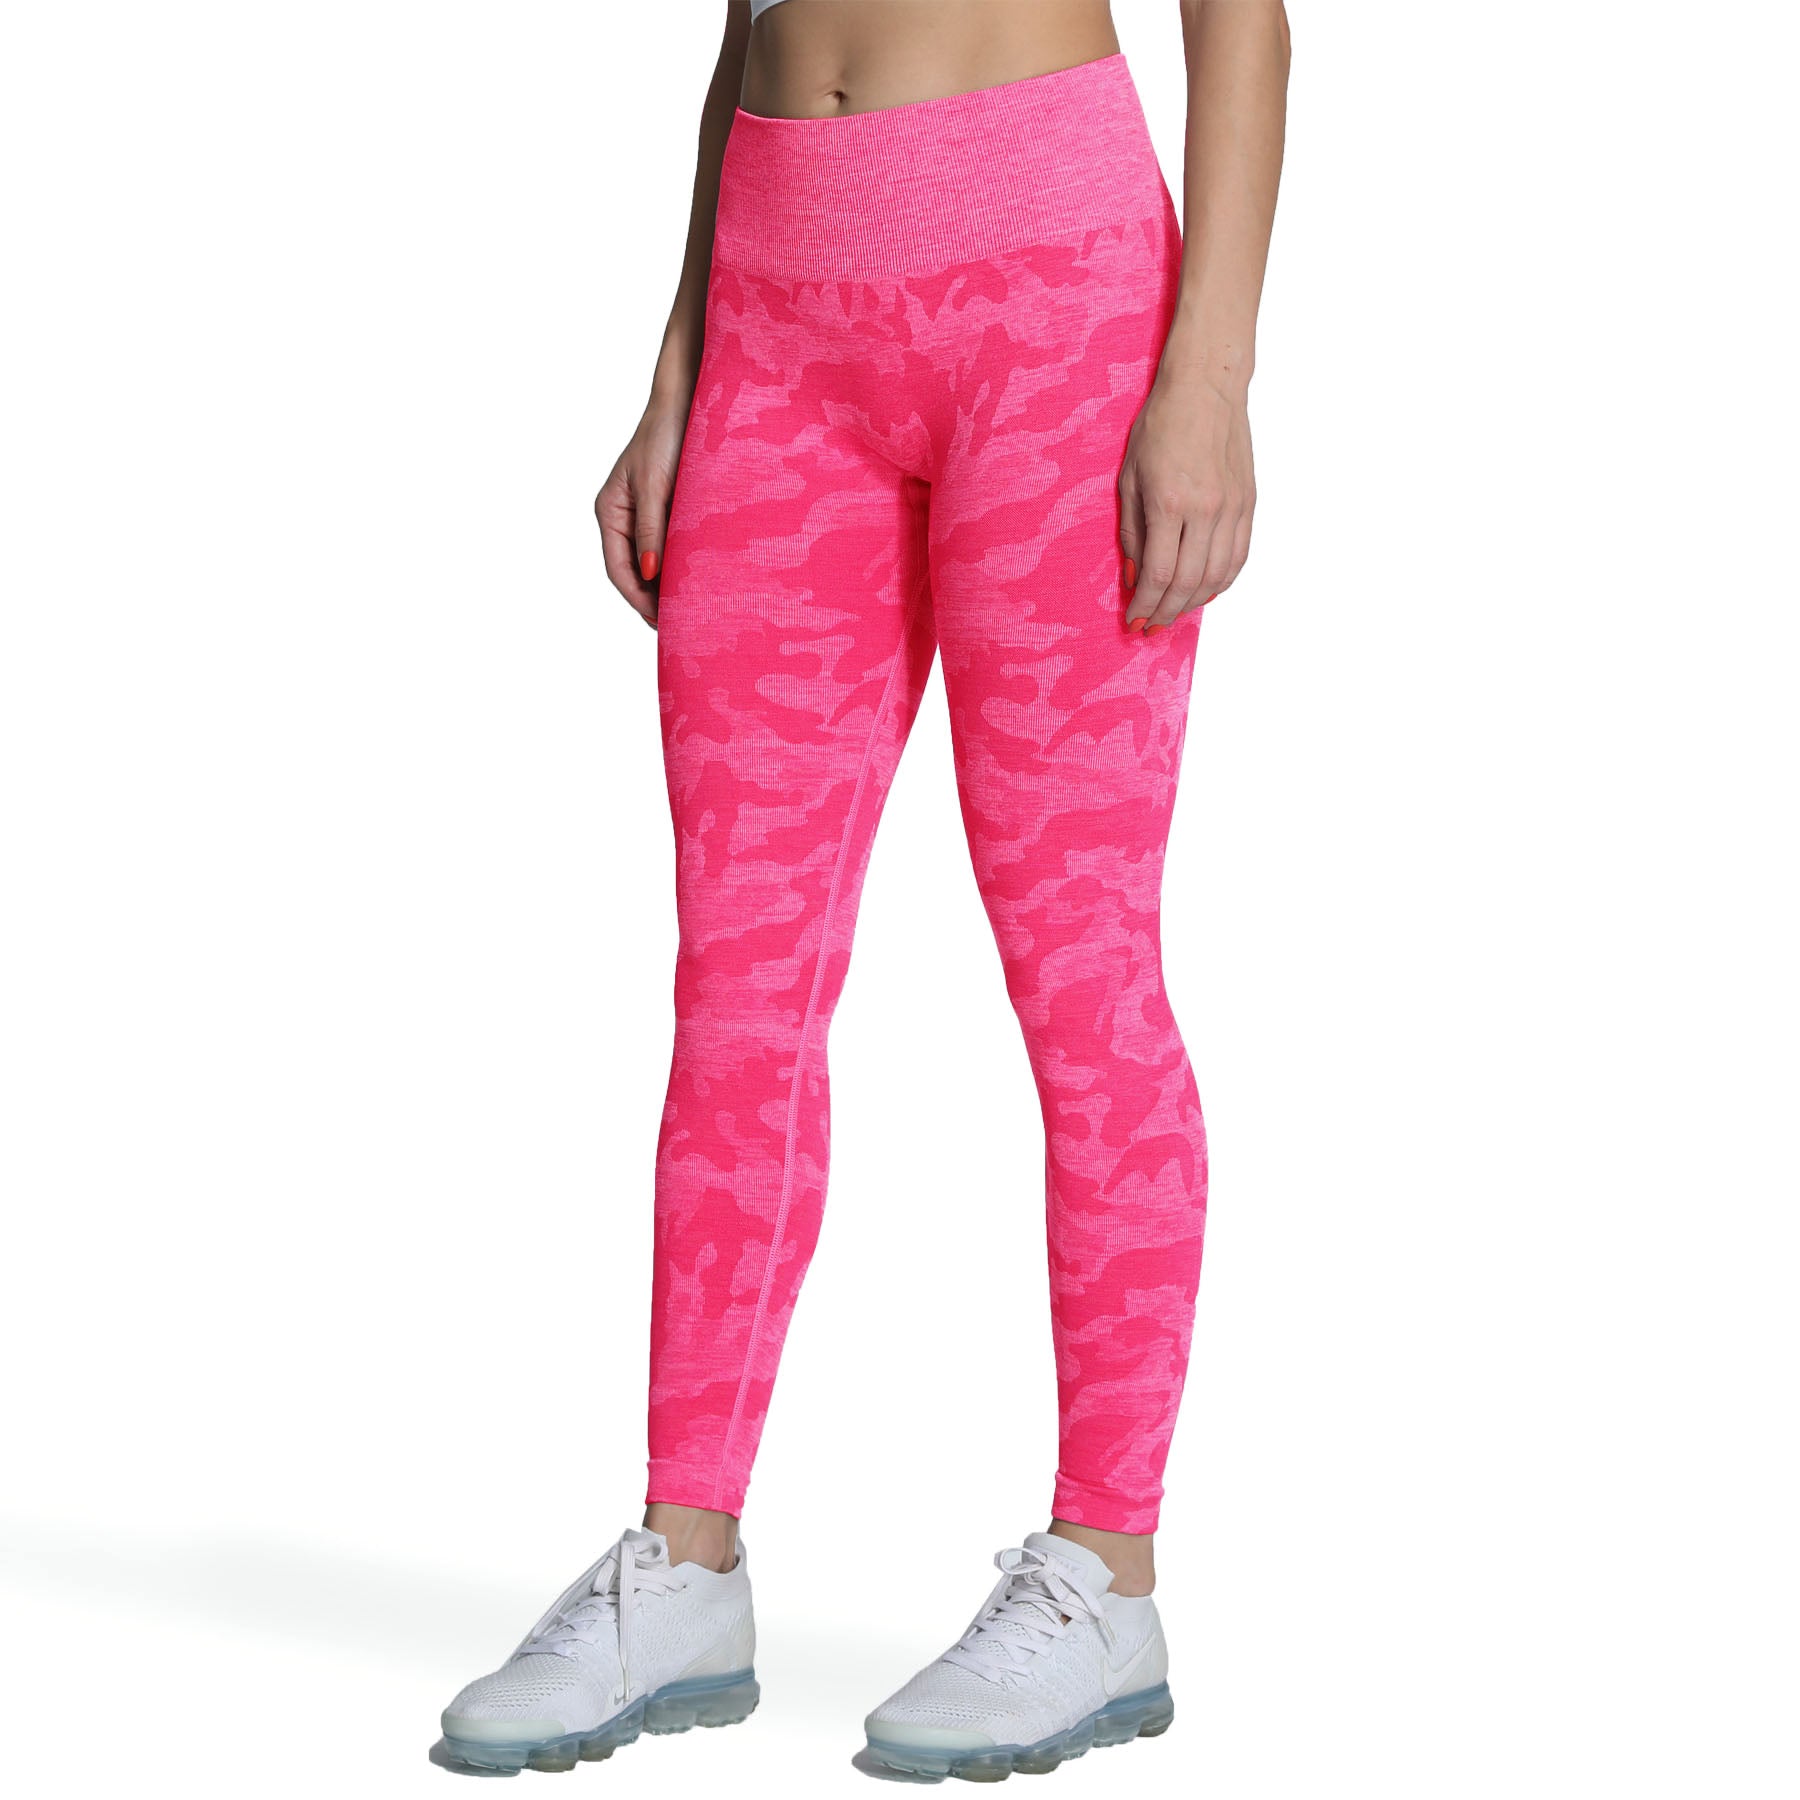 RBX Camo Multi Color Pink Leggings Size XL - 65% off